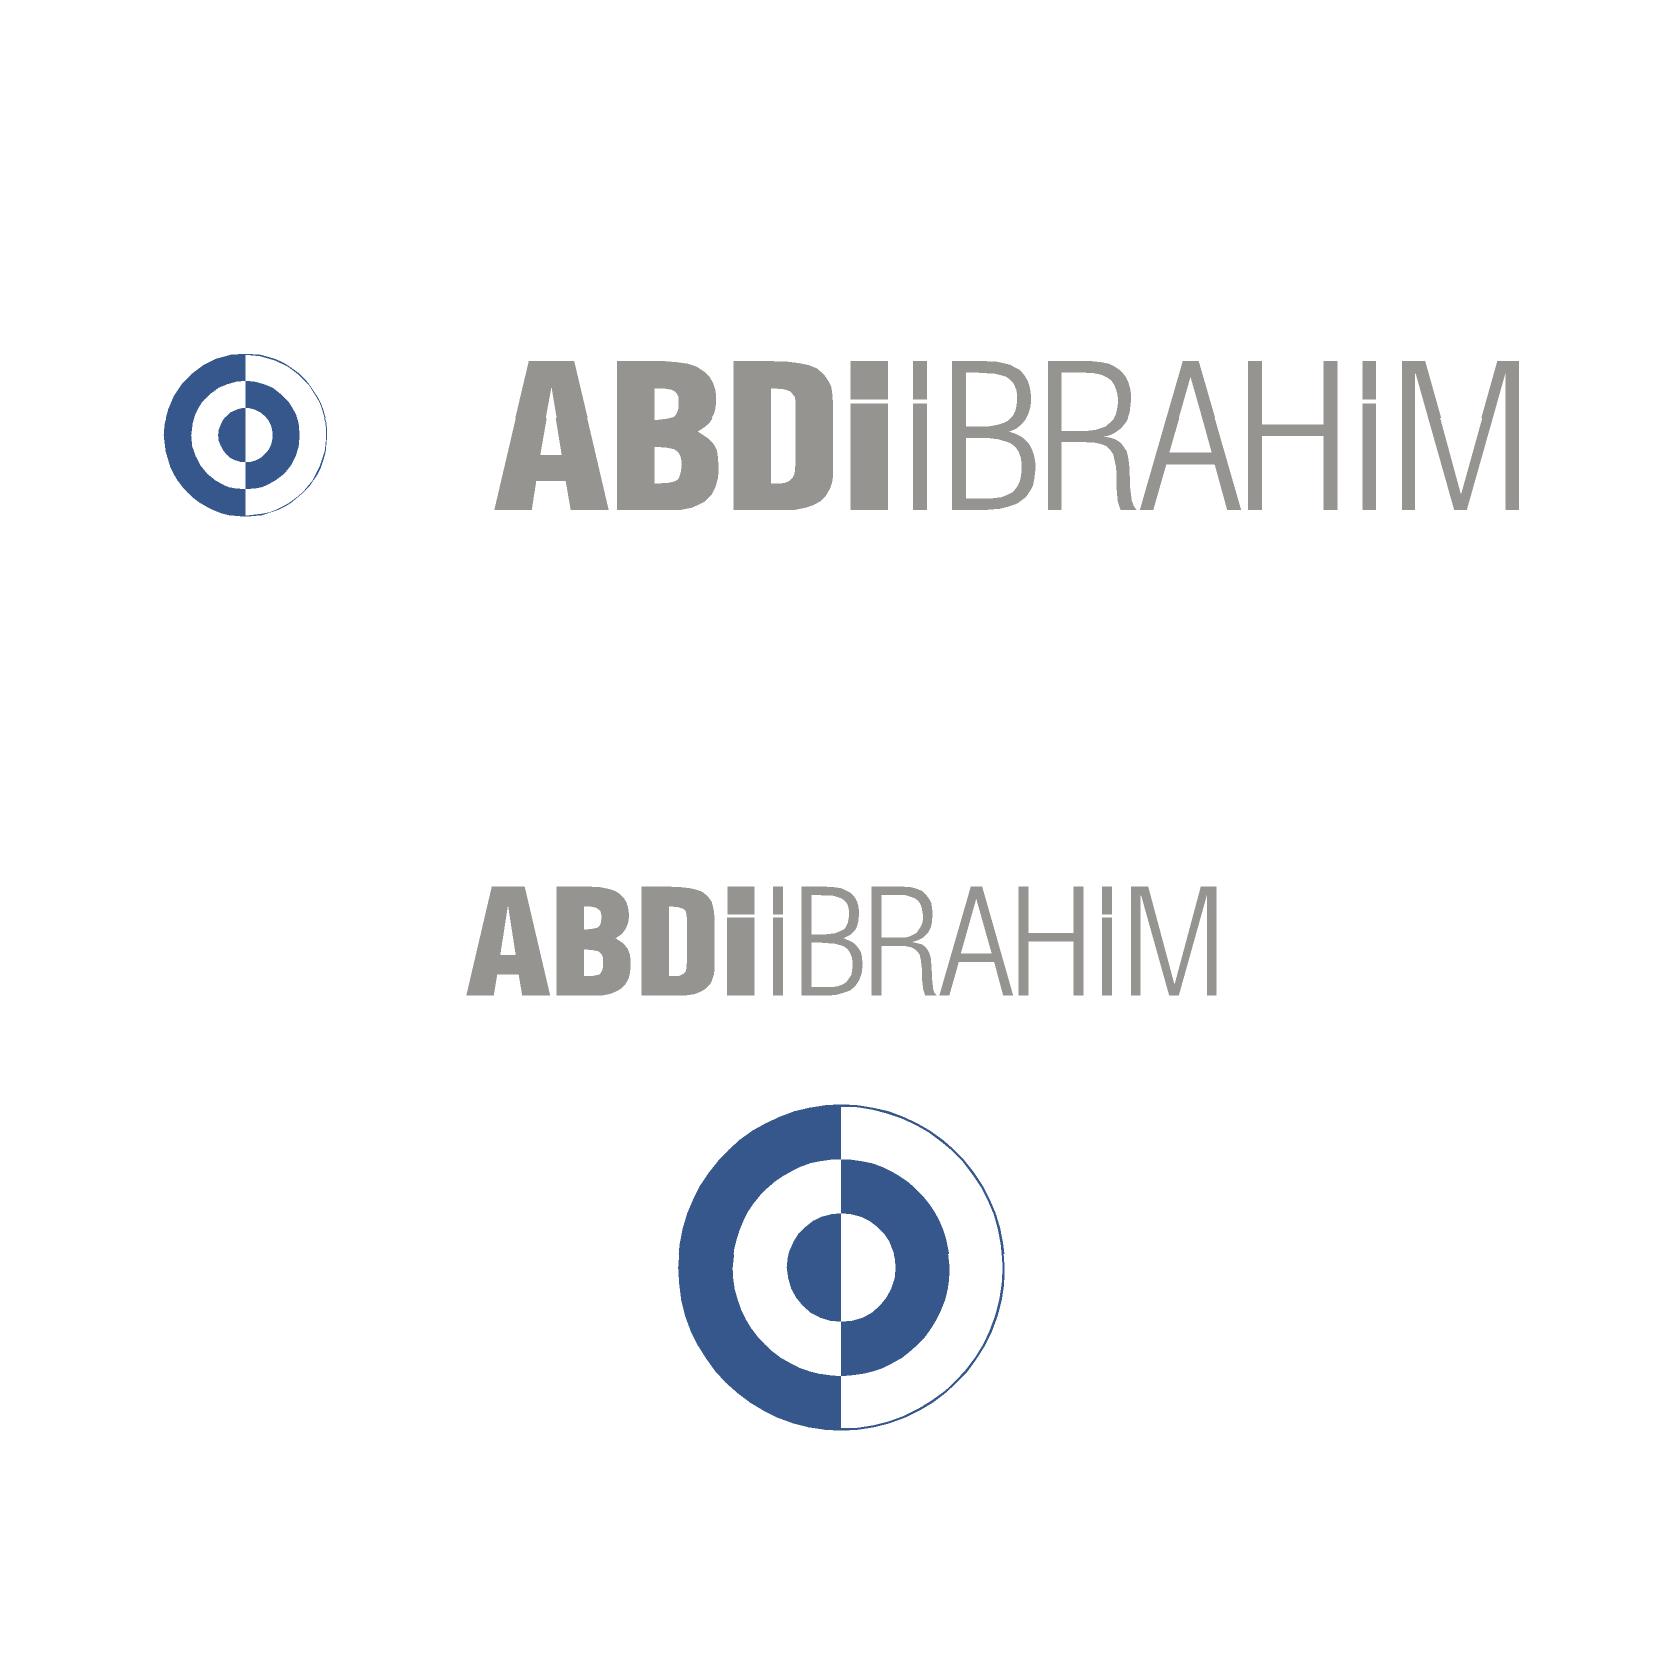 Abdi Ibrahim vector logo .